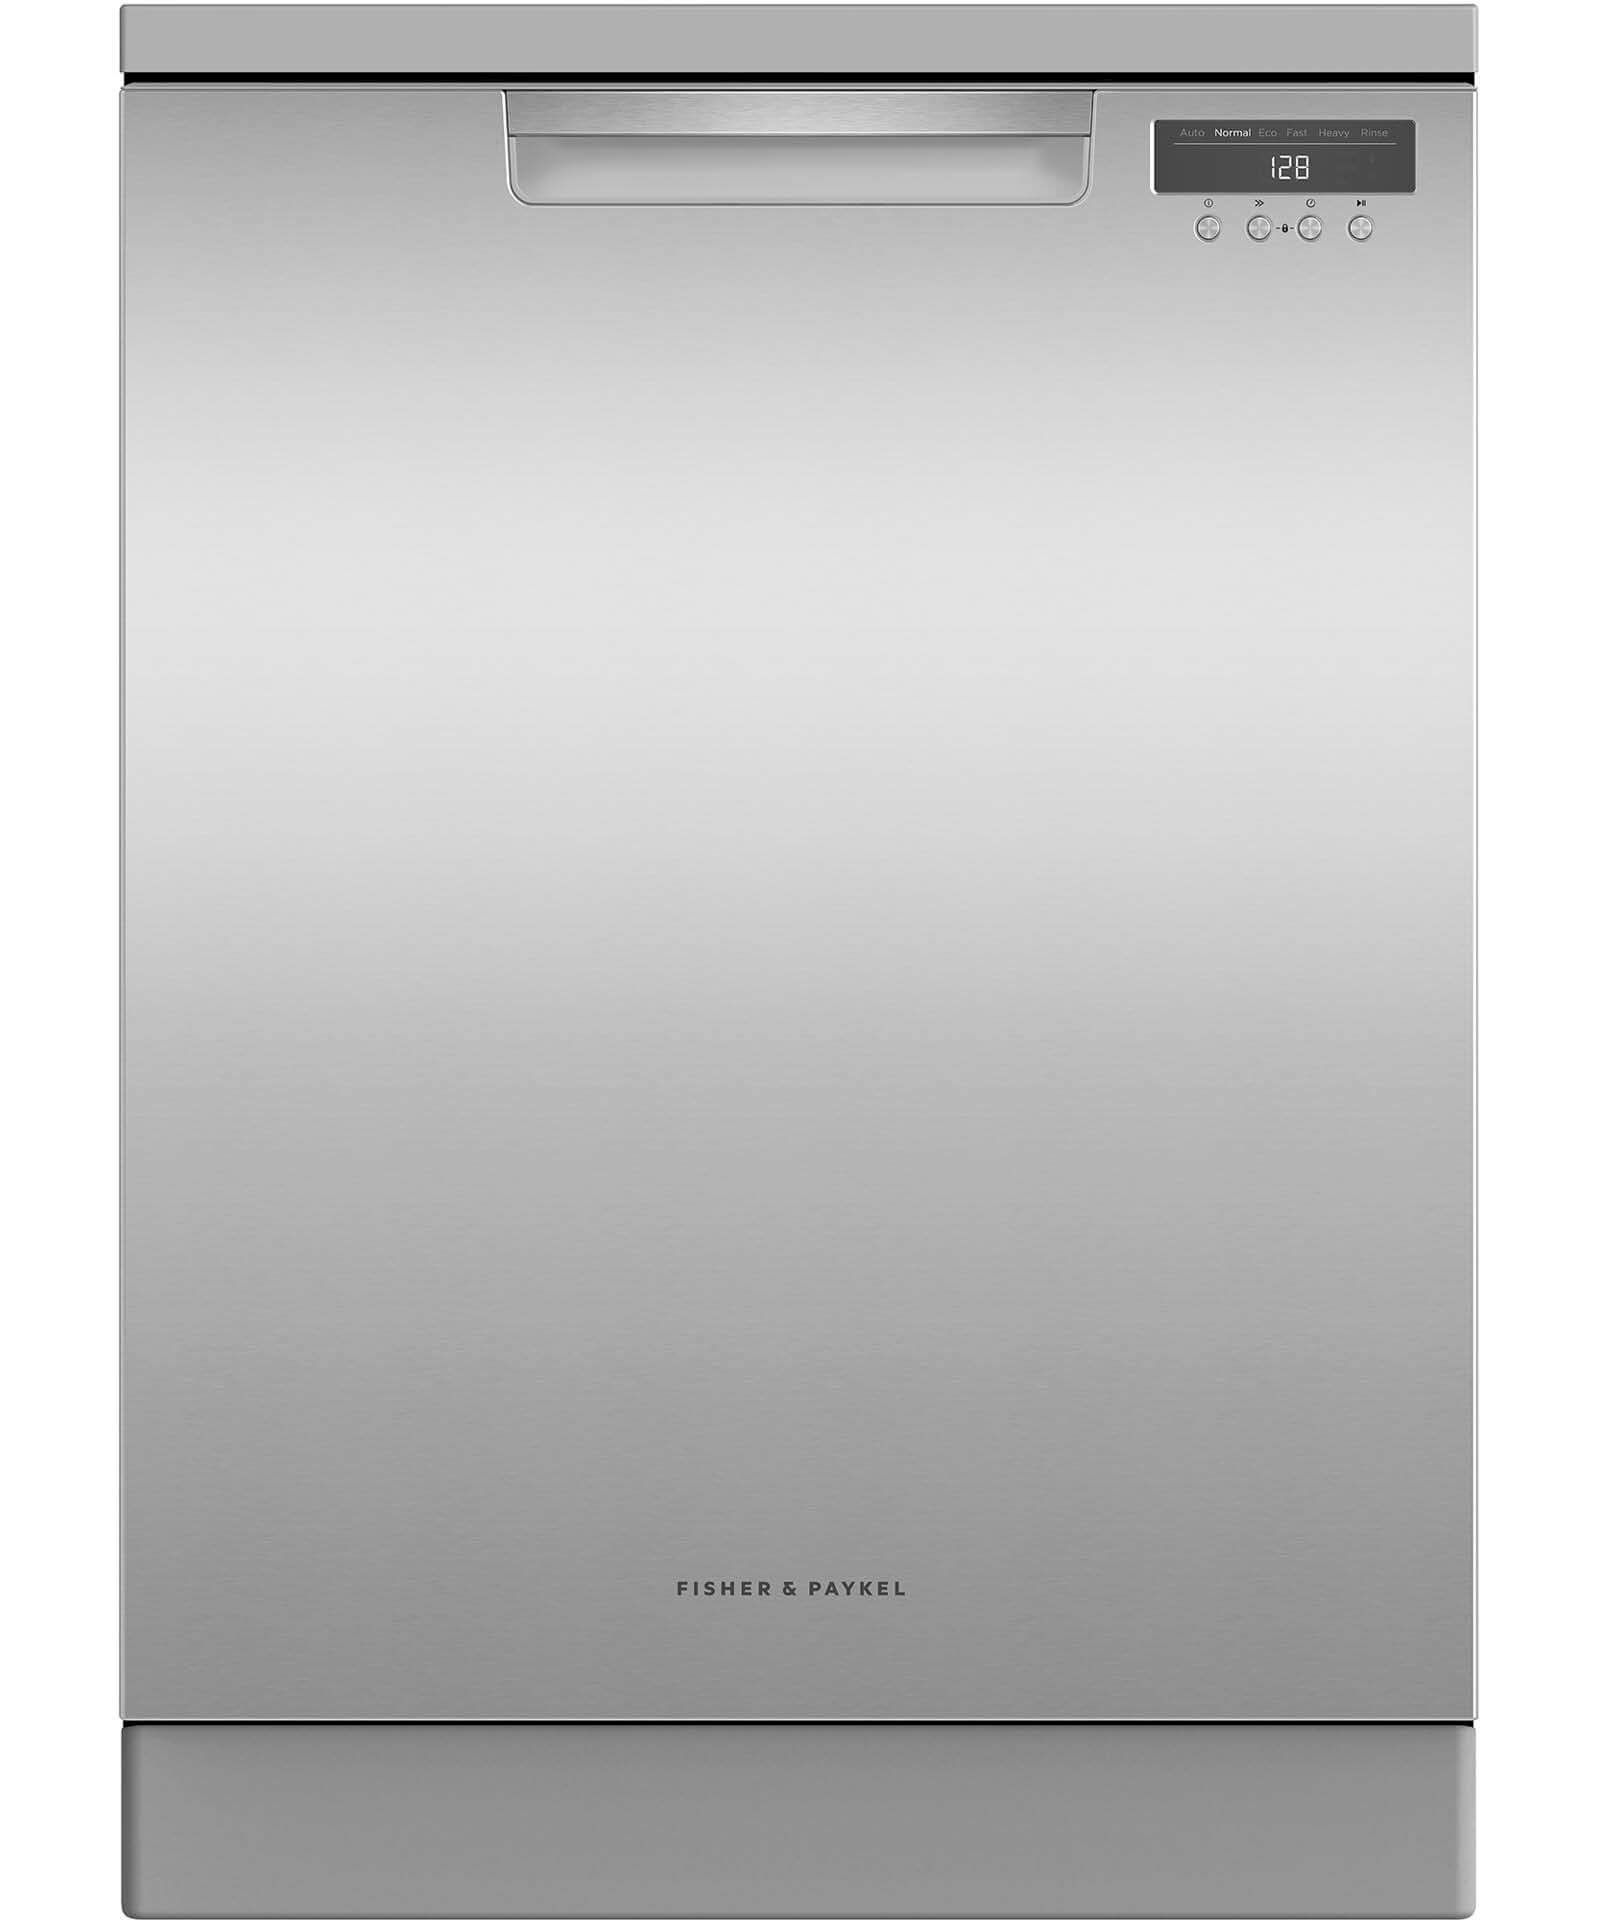 DW60FC2X1 Dishwasher, 15 Place Settings